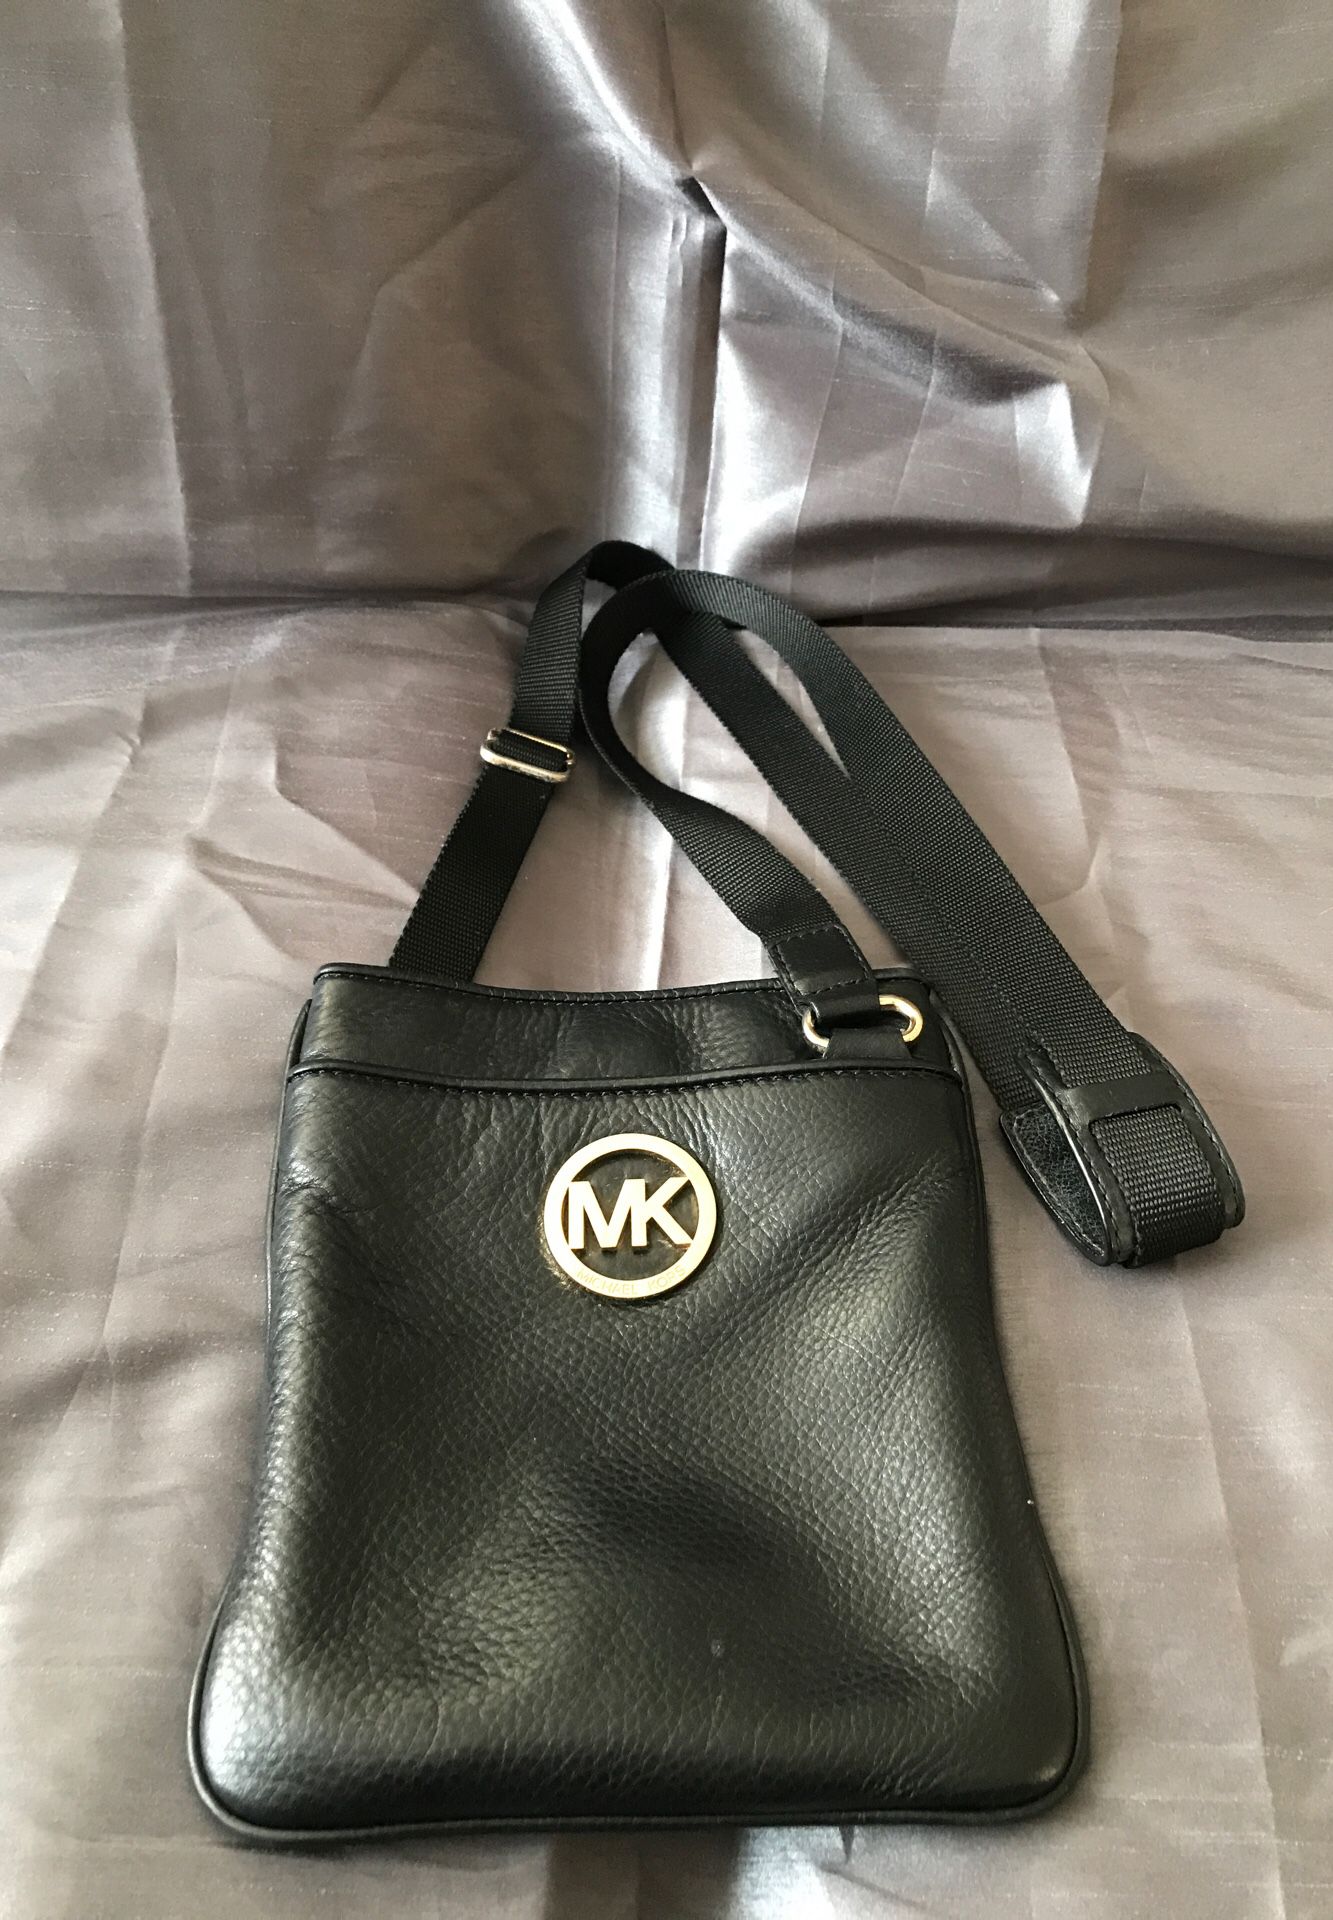 Black Michael Kors crossover bag